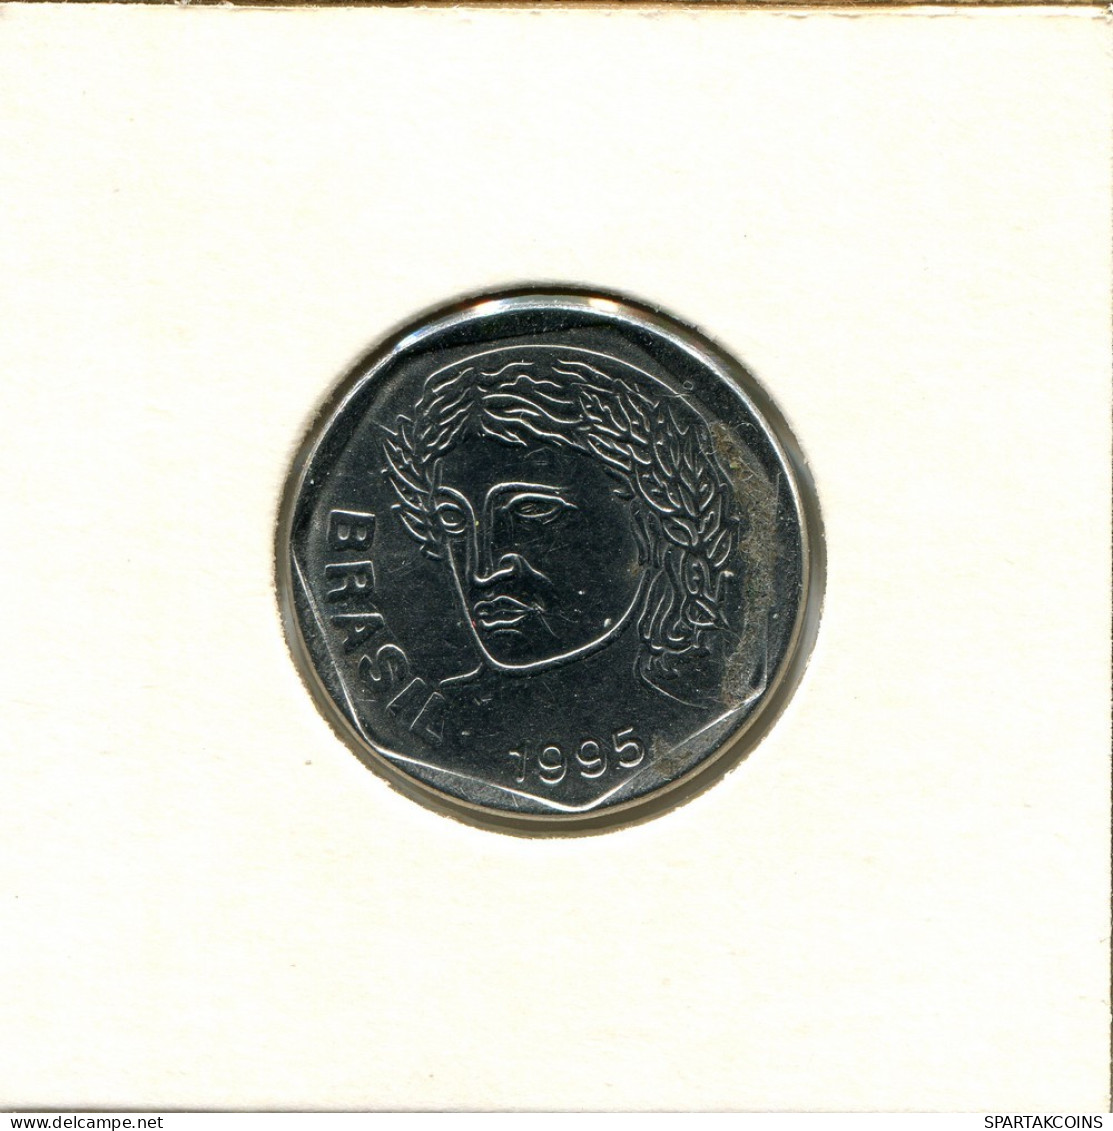 25 CENTAVOS 1995 BRAZIL Coin #AU130.U.A - Brazil